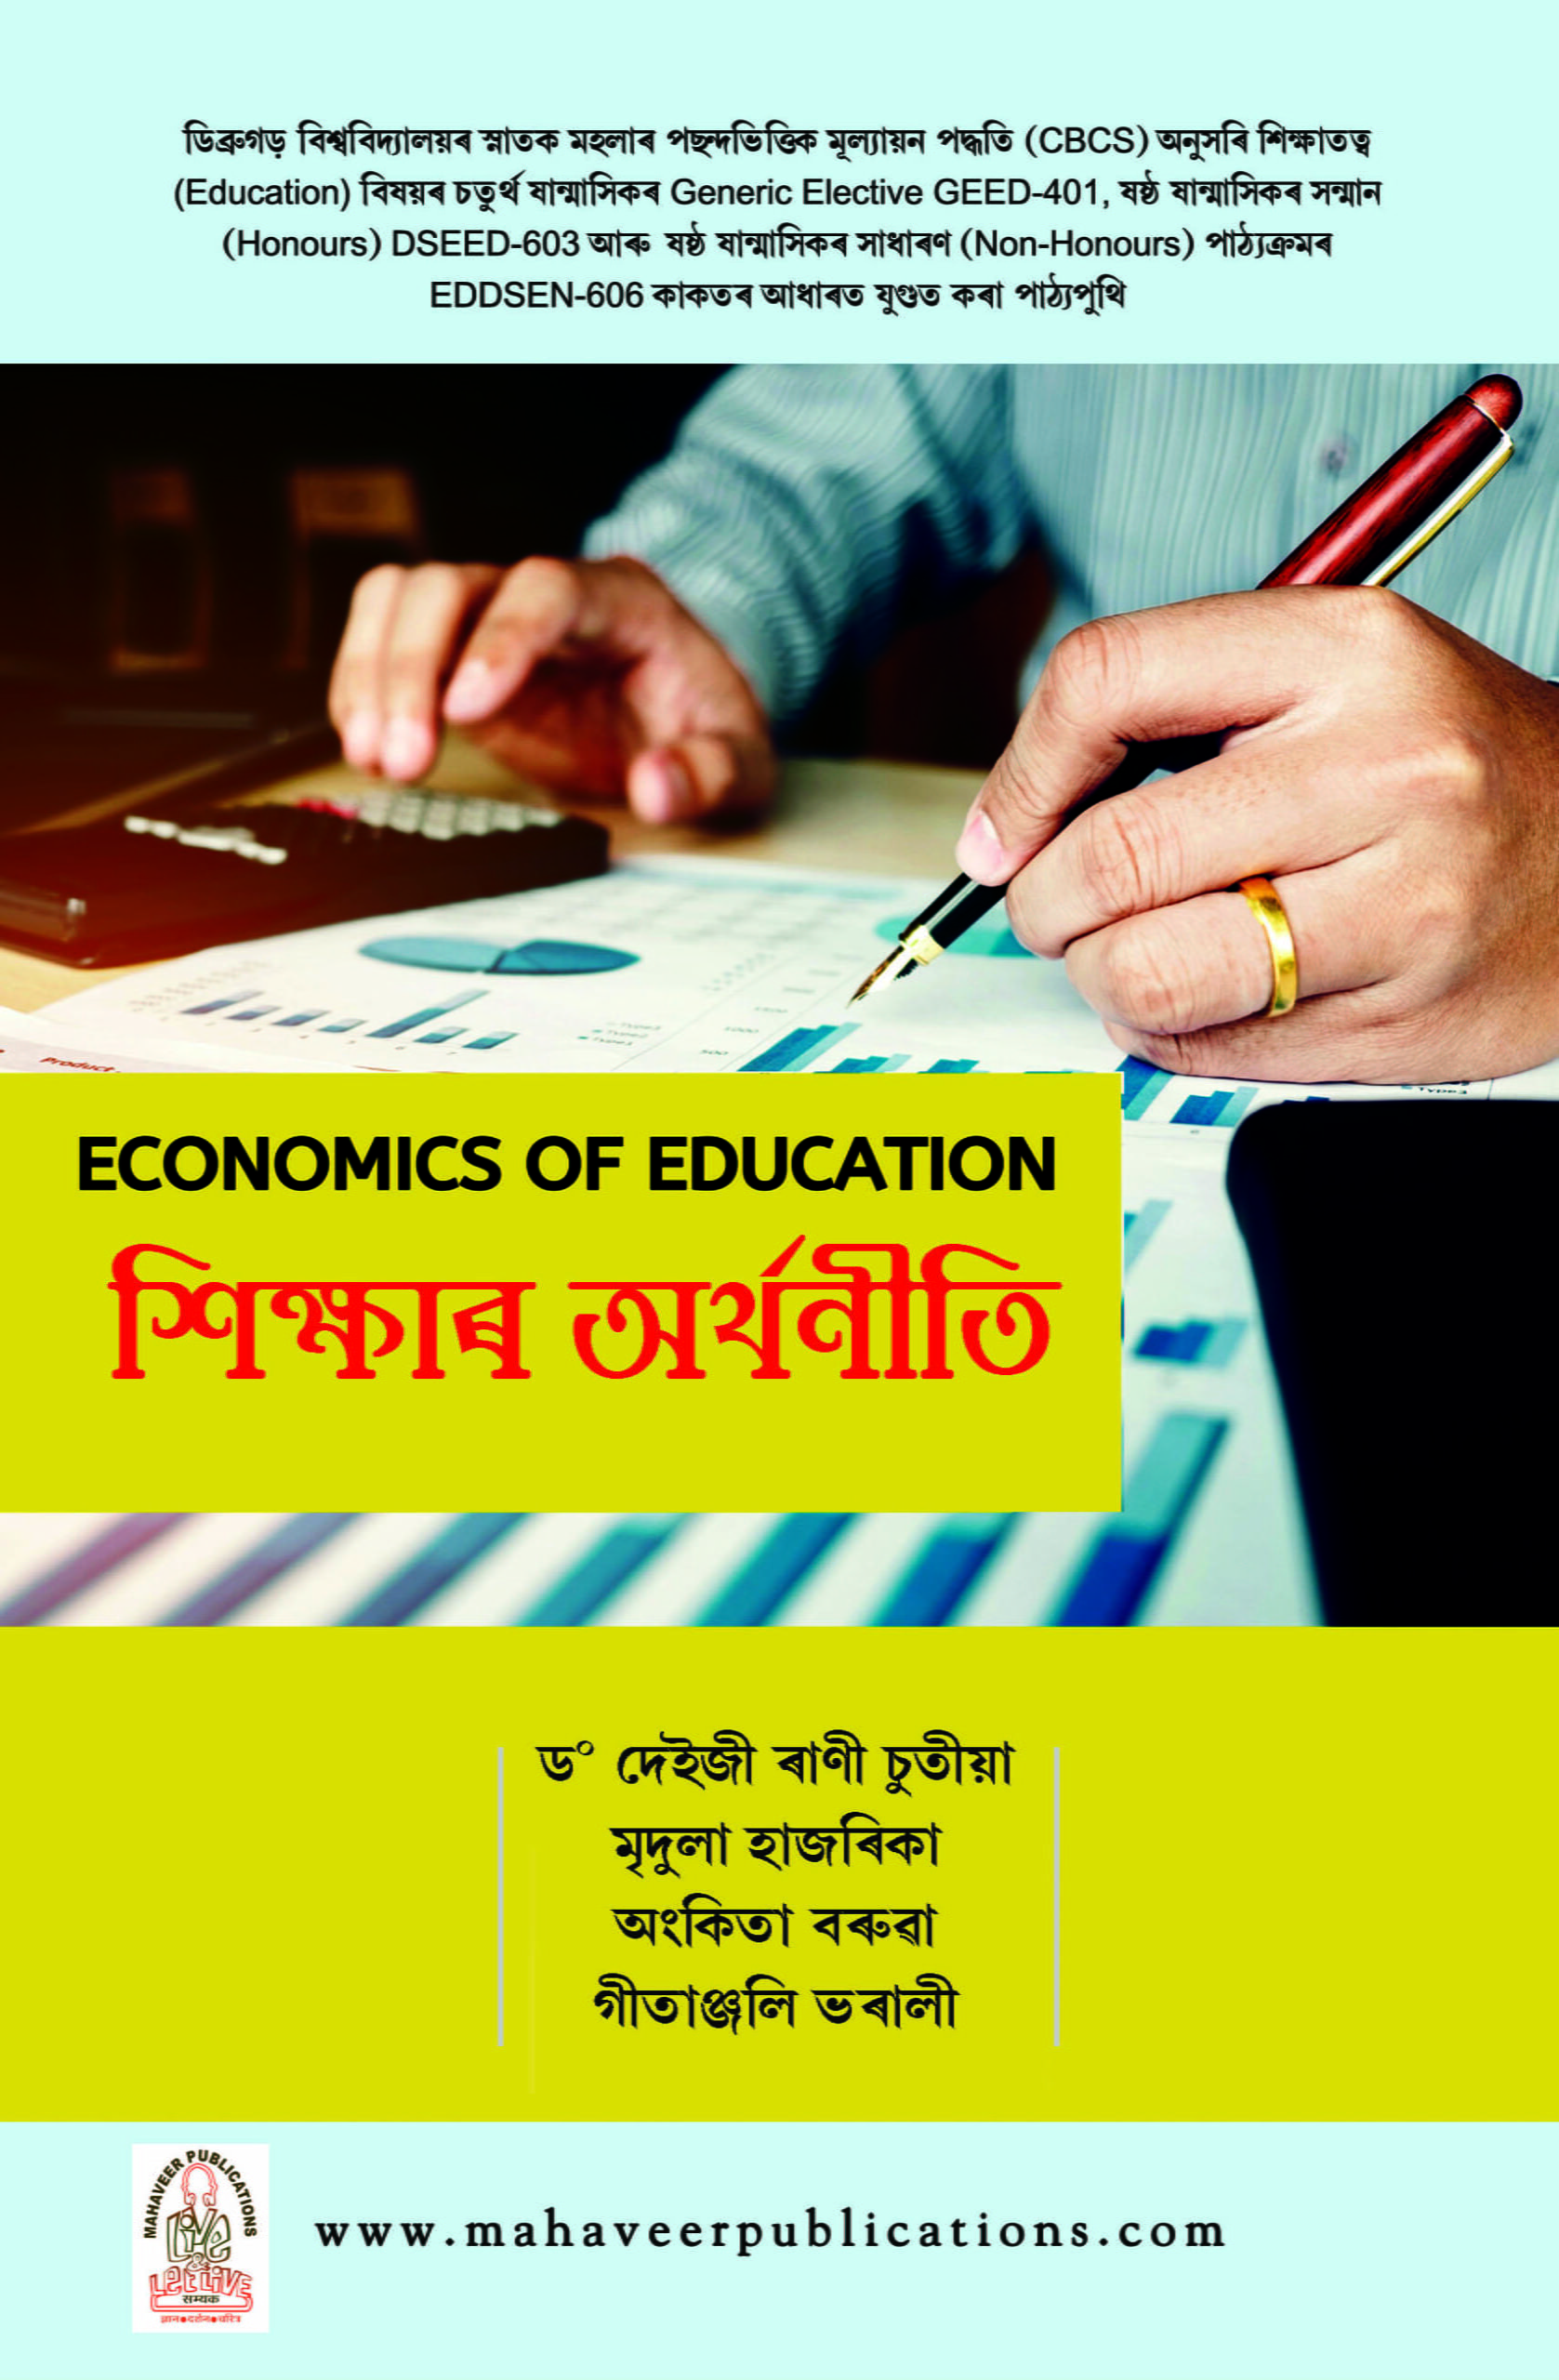 Economics-of-Education.jpg